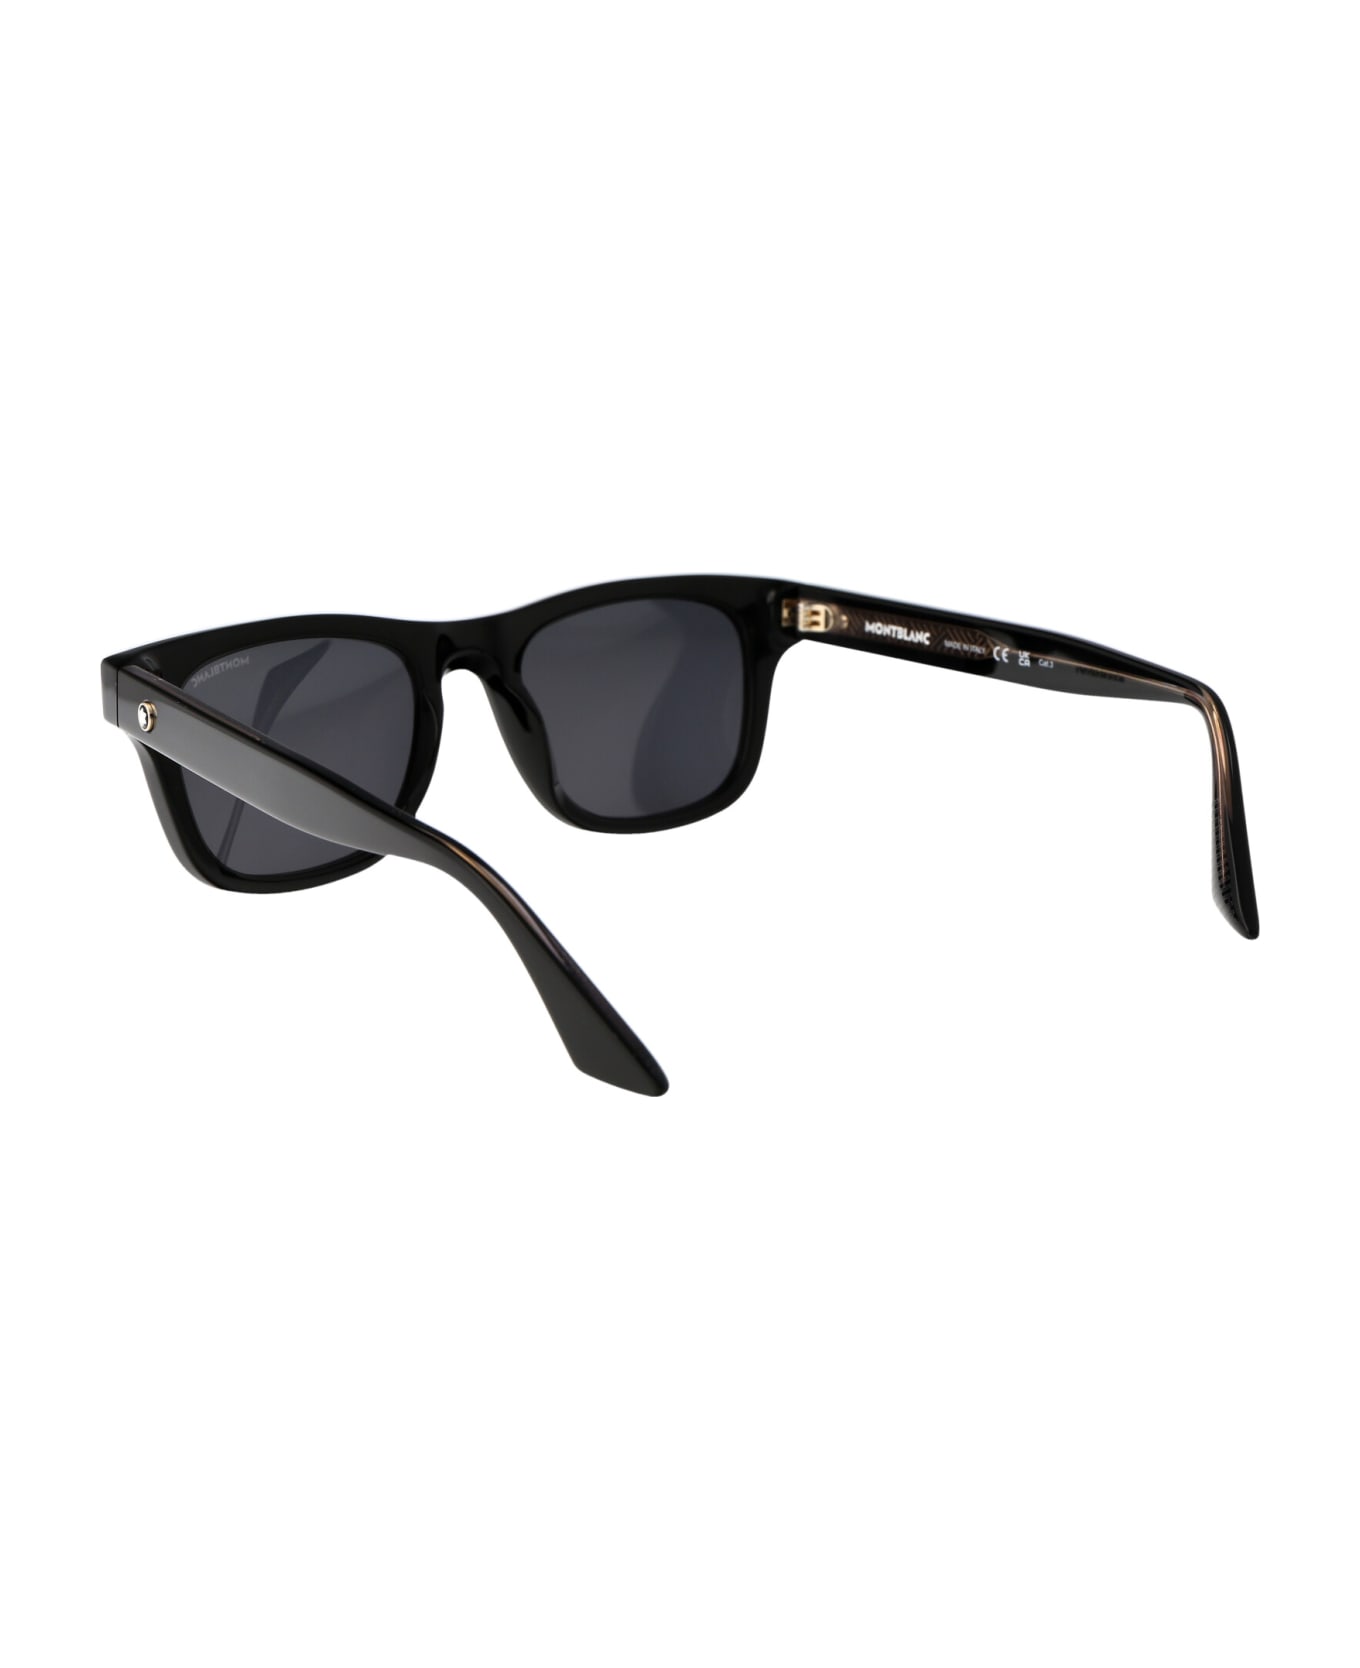 Montblanc Mb0254s Sunglasses - 001 BLACK BLACK SMOKE